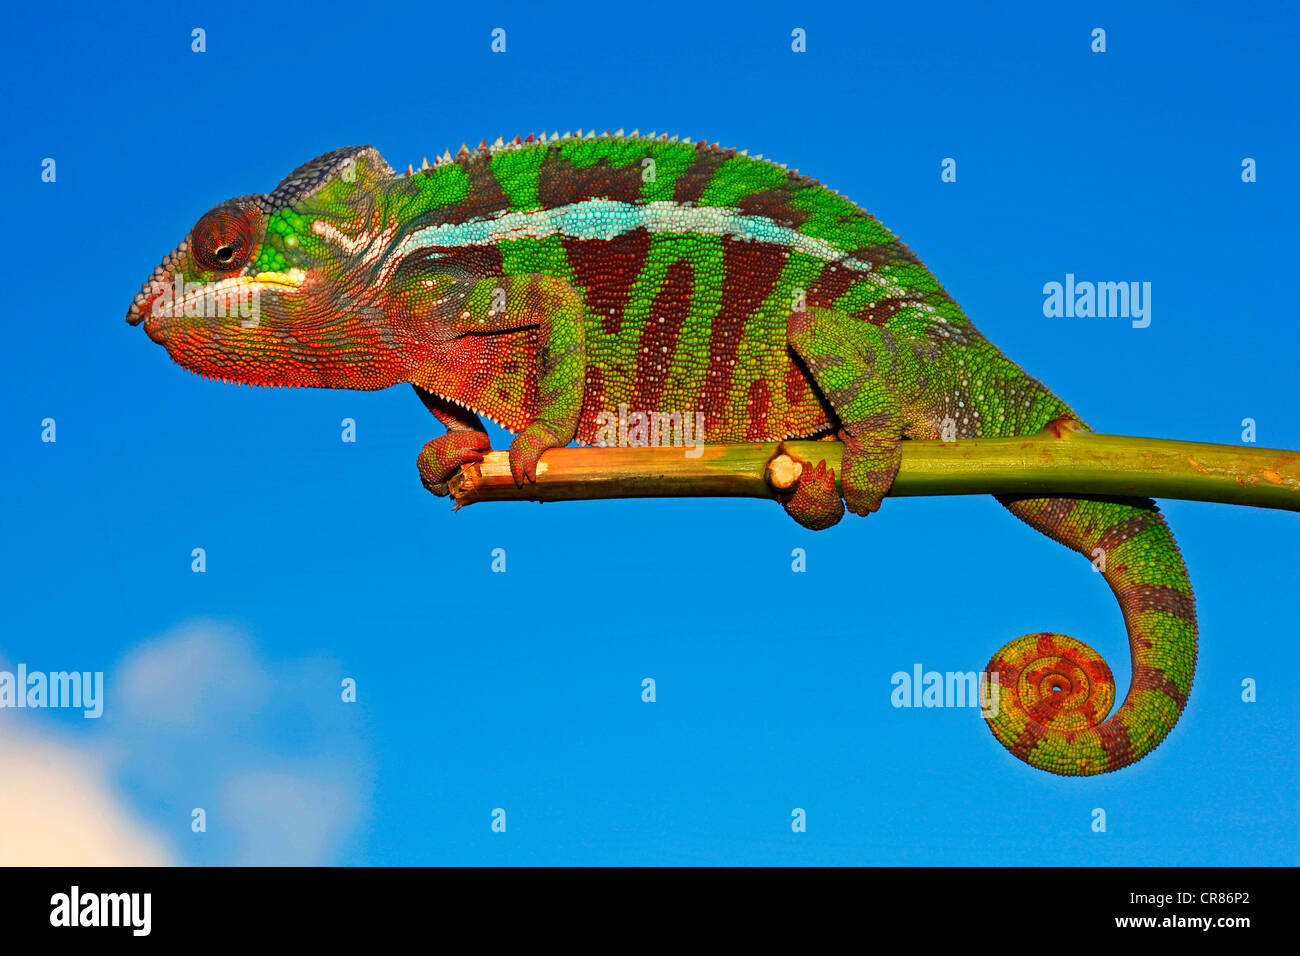 Panther Chameleon (Furcifer pardalis), Montagne d'Ambre colour variation, Madagascar, Africa, Indian Ocean Stock Photo